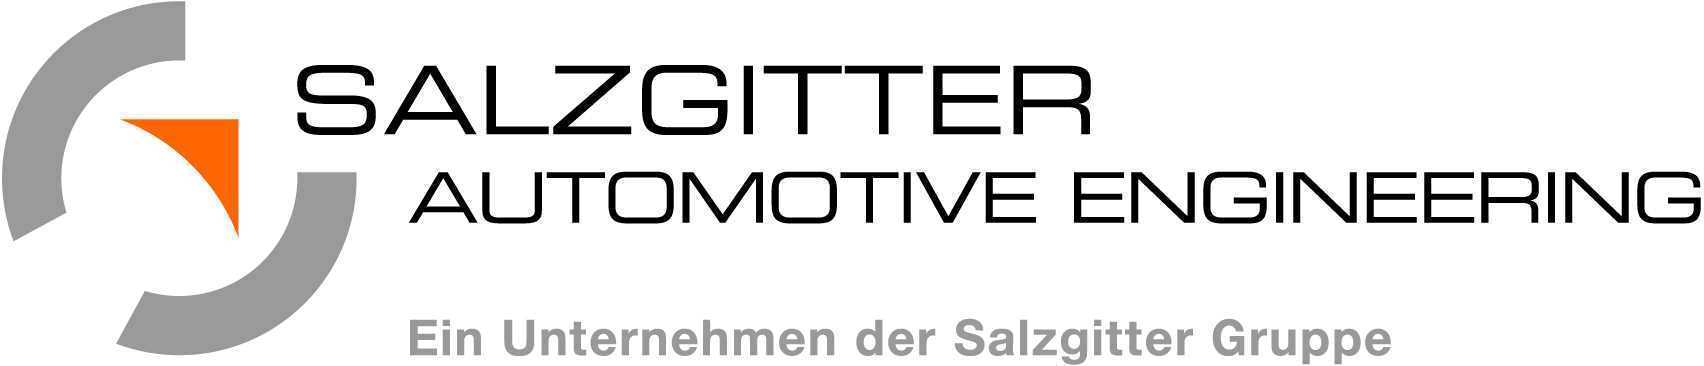 Salzgitter Automotive Engineering